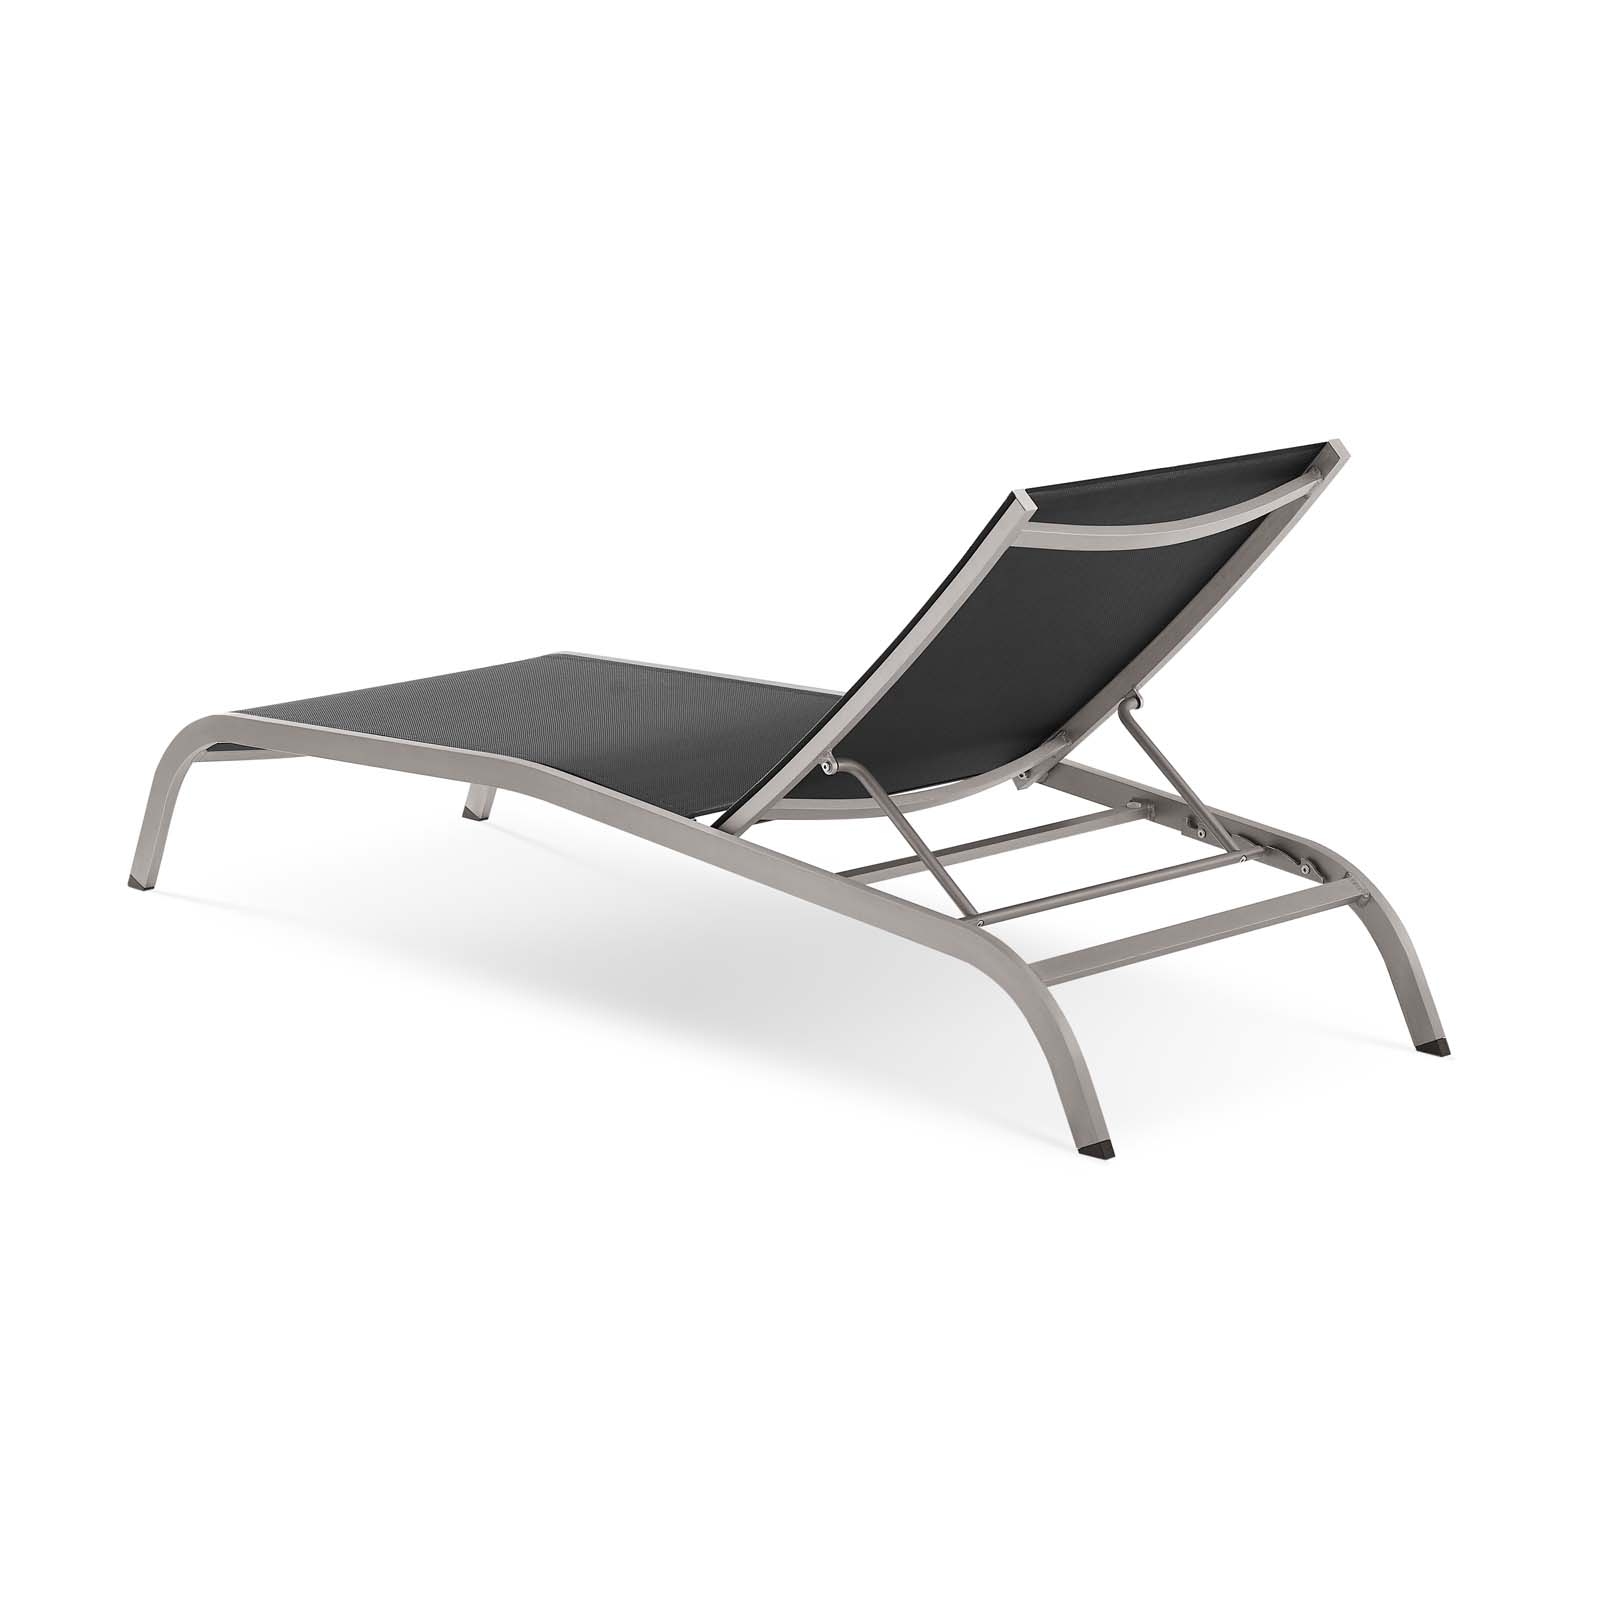 Contemporary Modern Urban Designer Outdoor Patio Balcony Garden Furniture Lounge Lounge Chair, Aluminum, Black - image 4 of 6